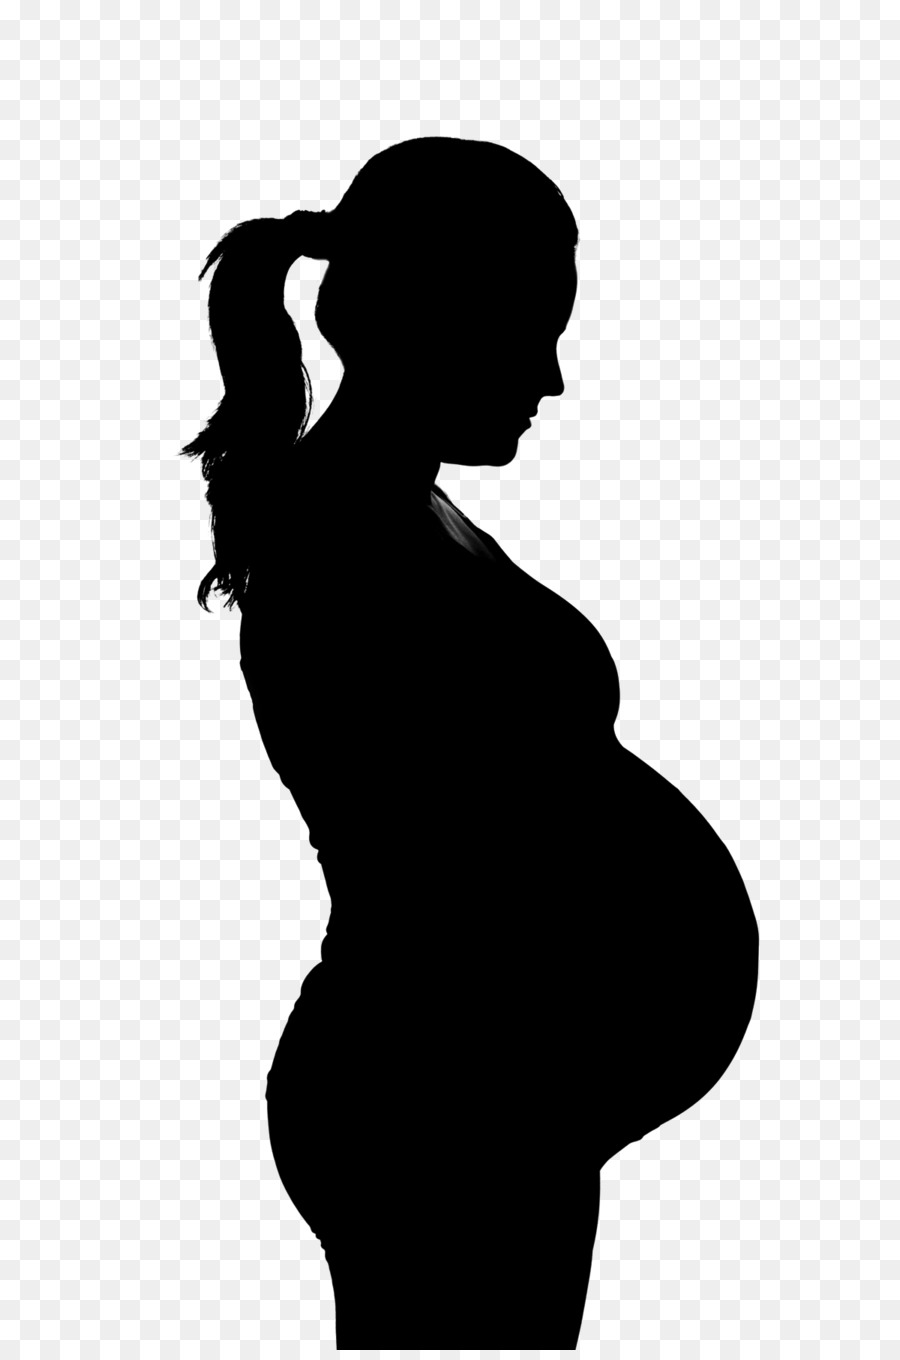 Free Silhouette Pregnant Woman, Download Free Silhouette Pregnant Woman